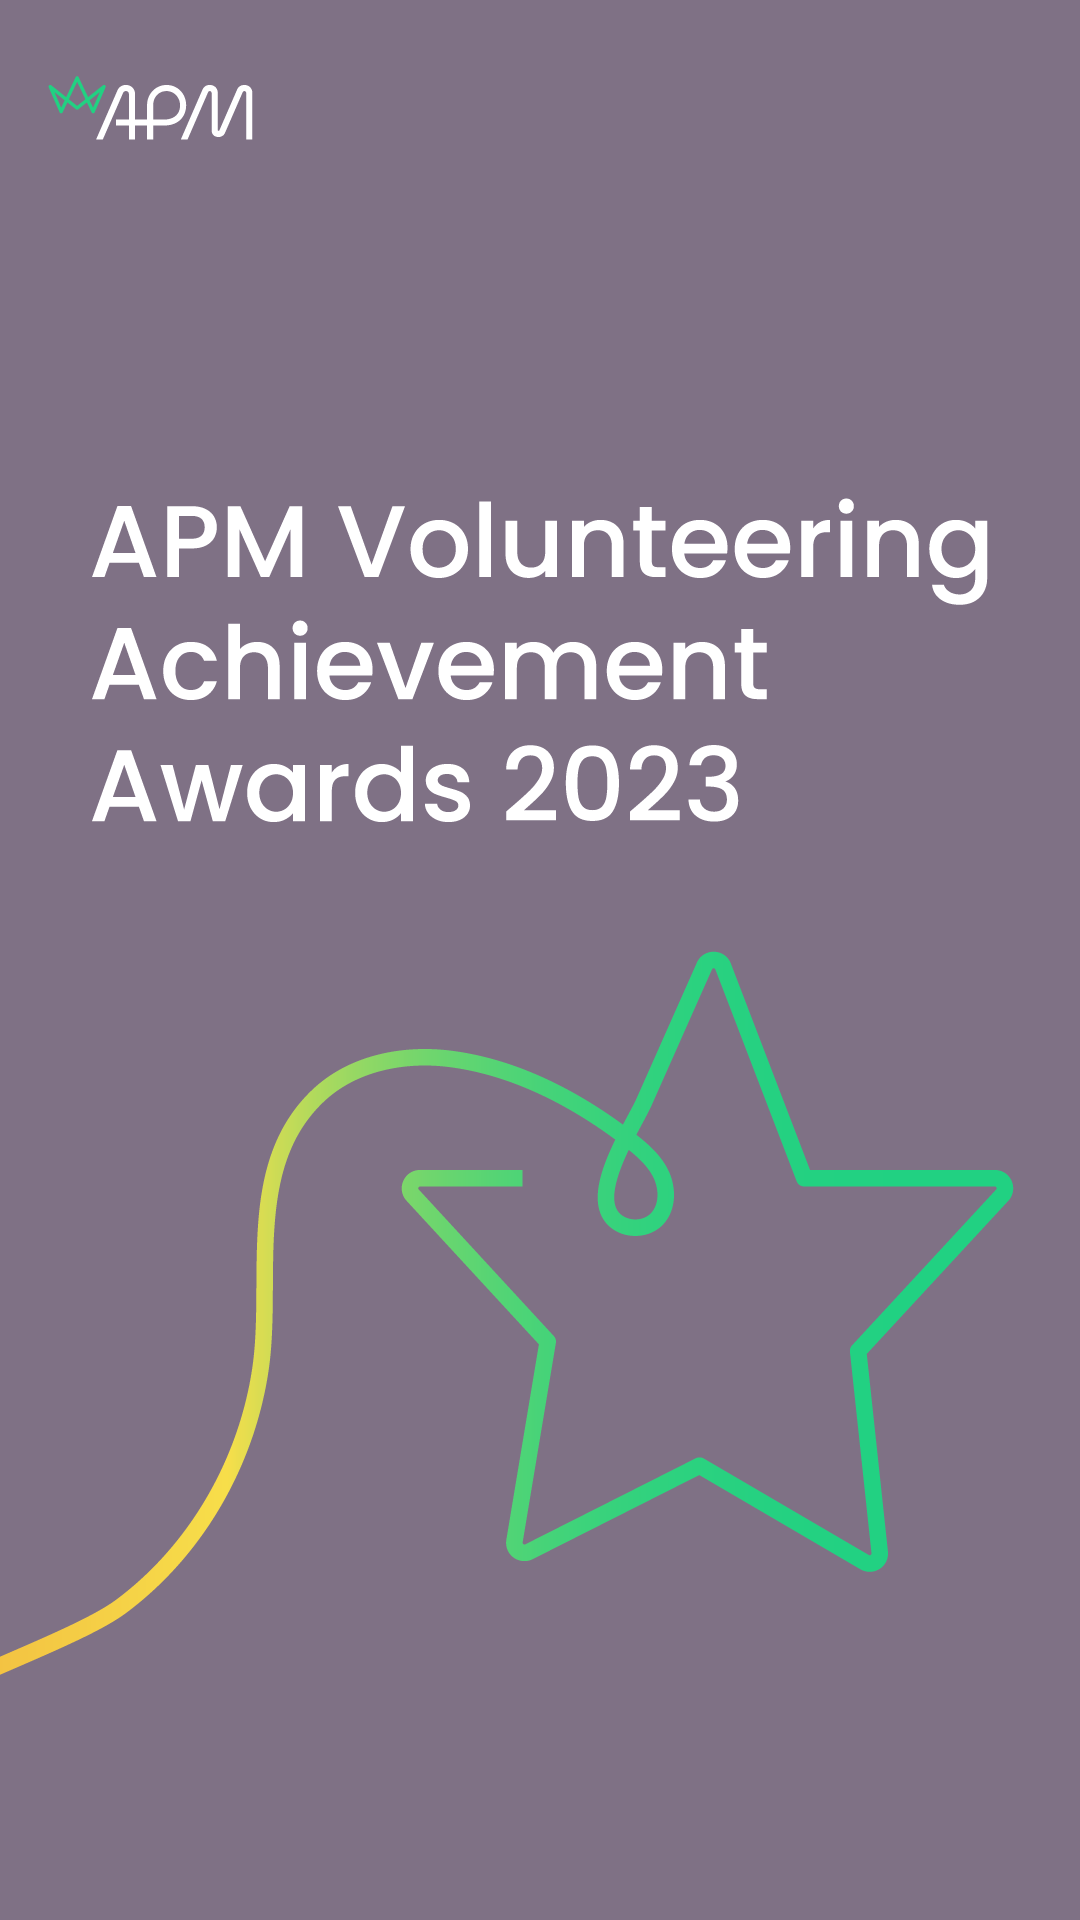 Volunteering with APM